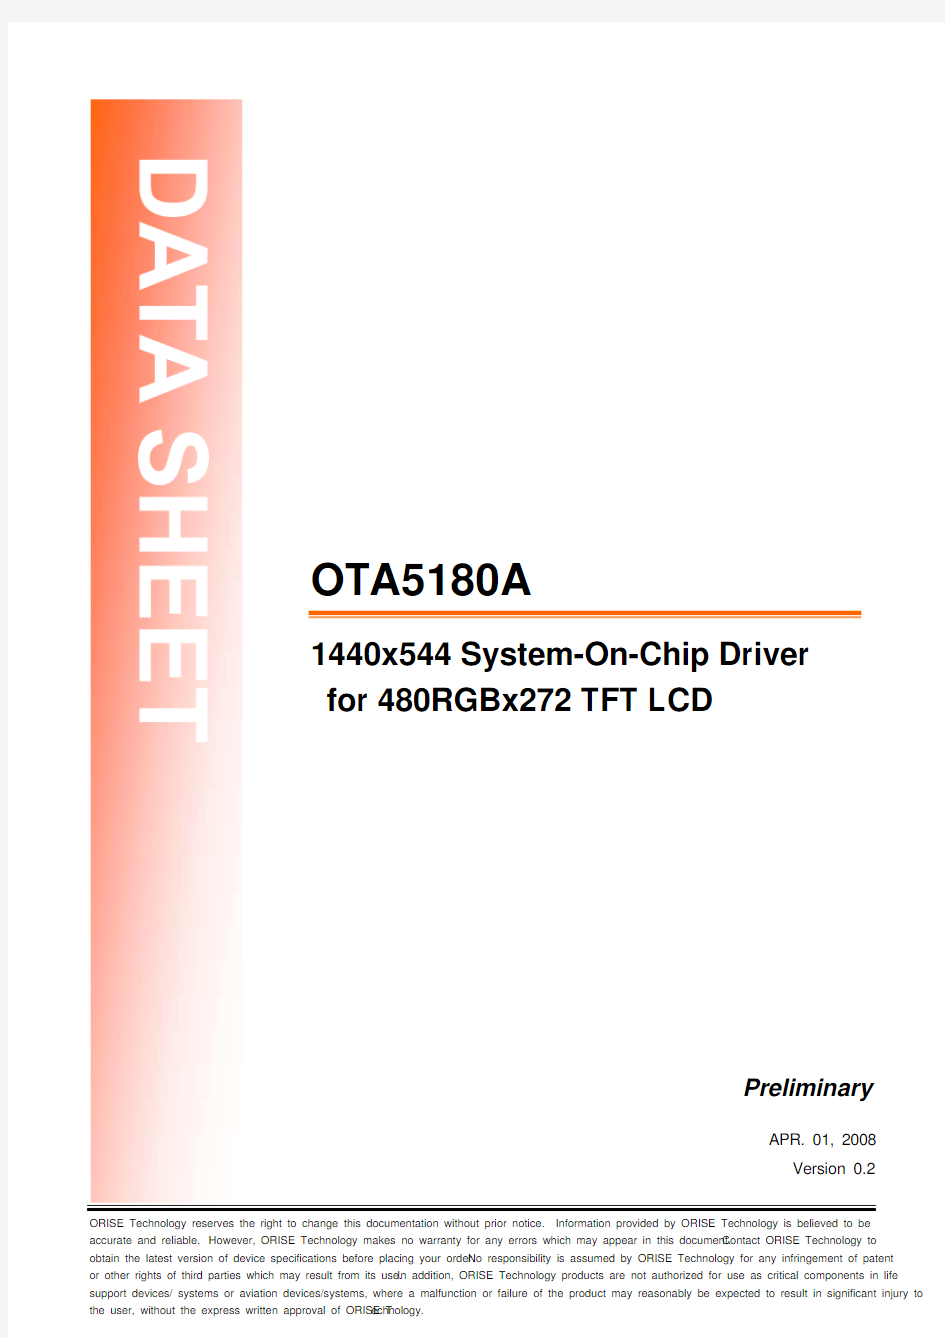 OTA5180A spec